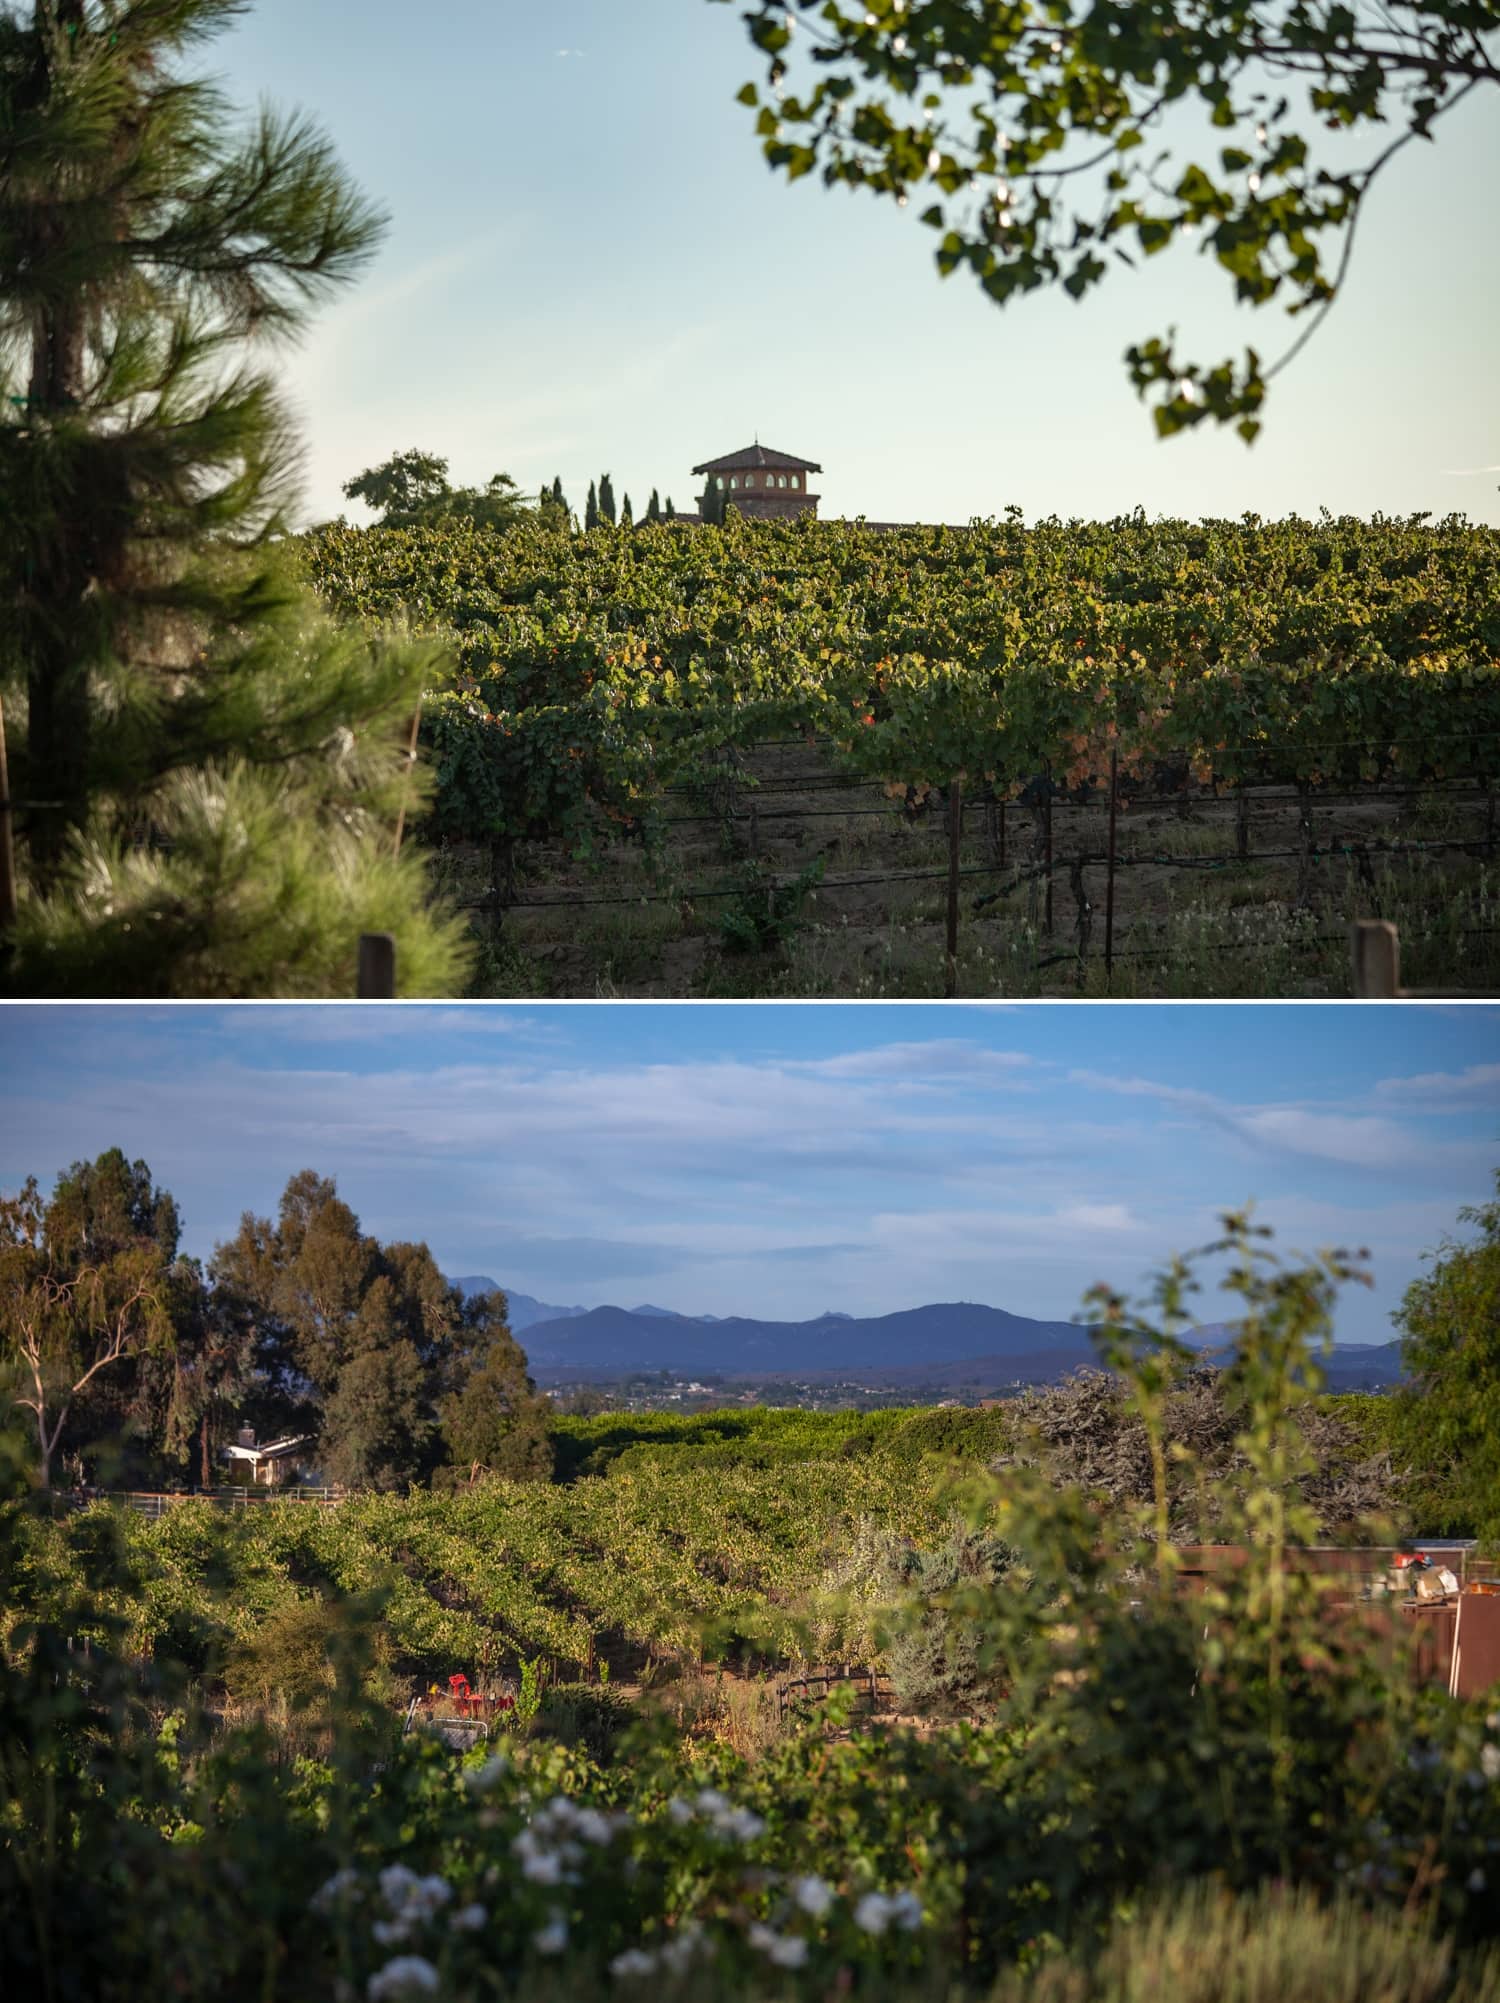 Views from Lorimar Winery in Temecula, CA. 